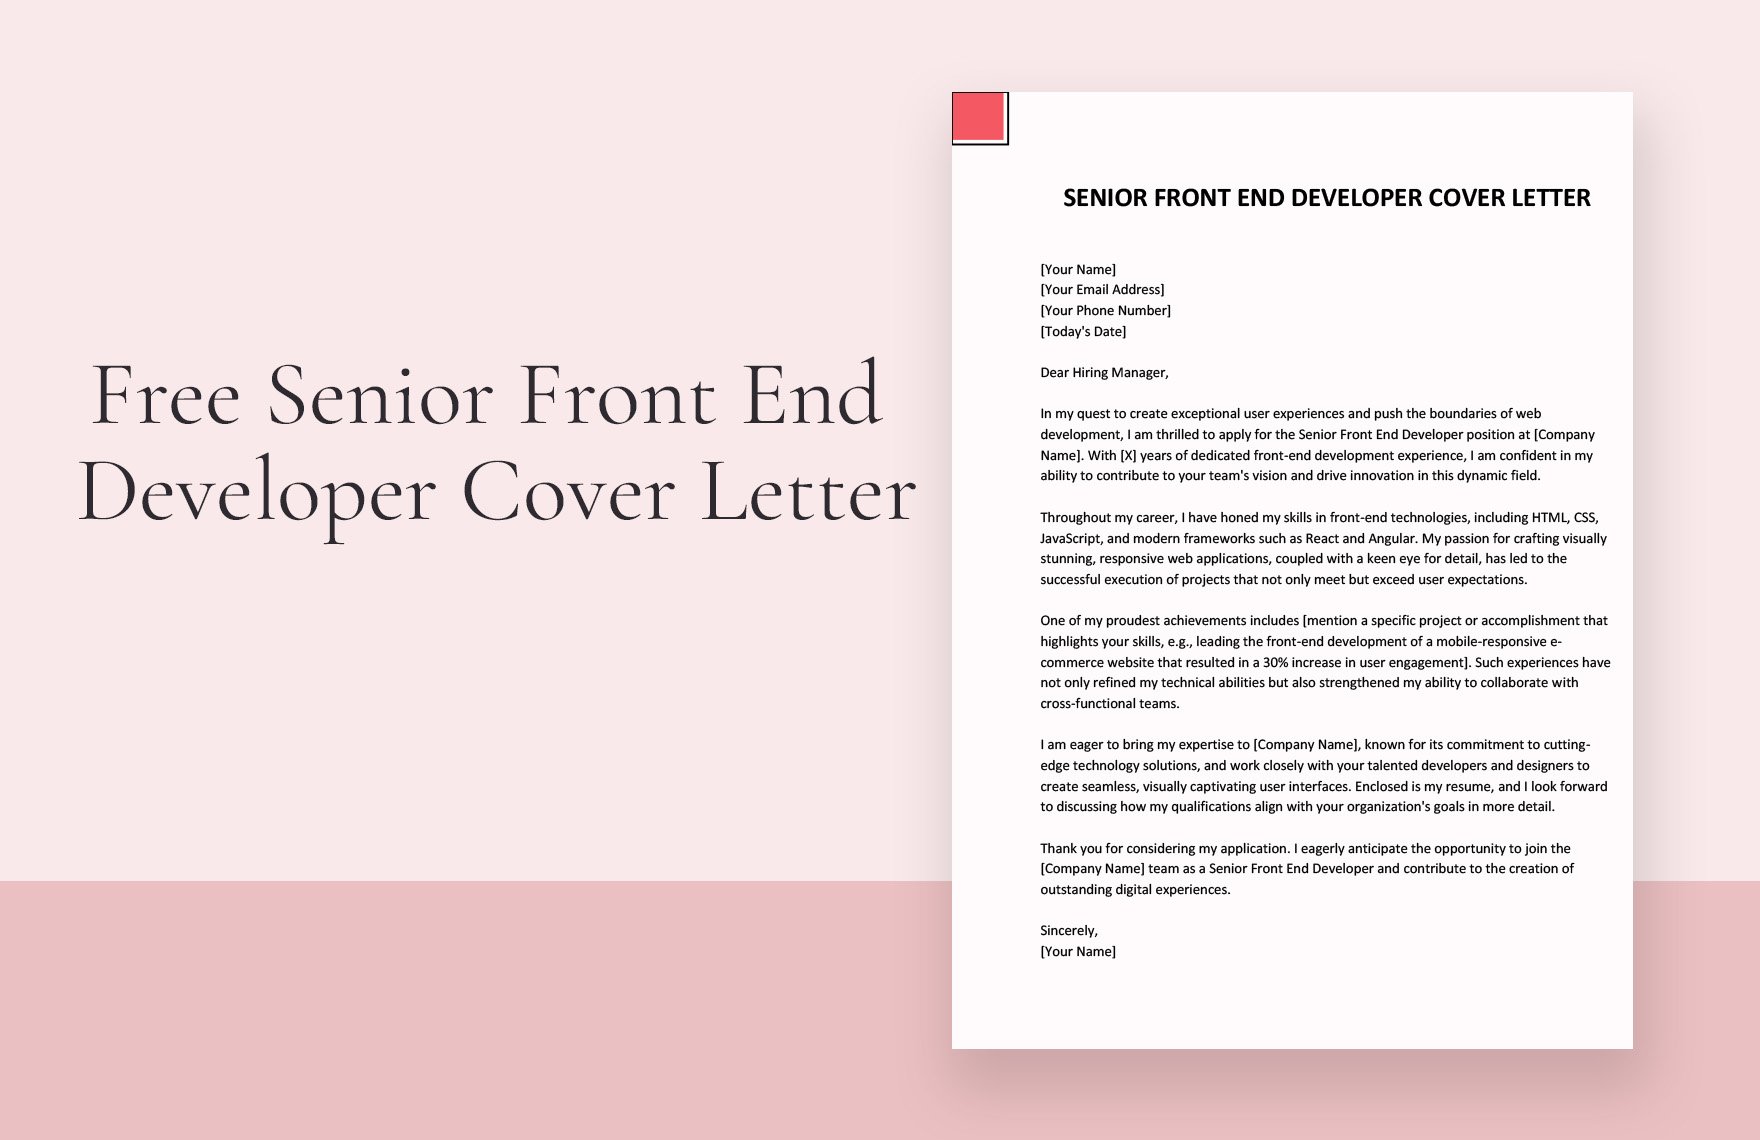 Senior Front End Developer Cover Letter in Word, Google Docs